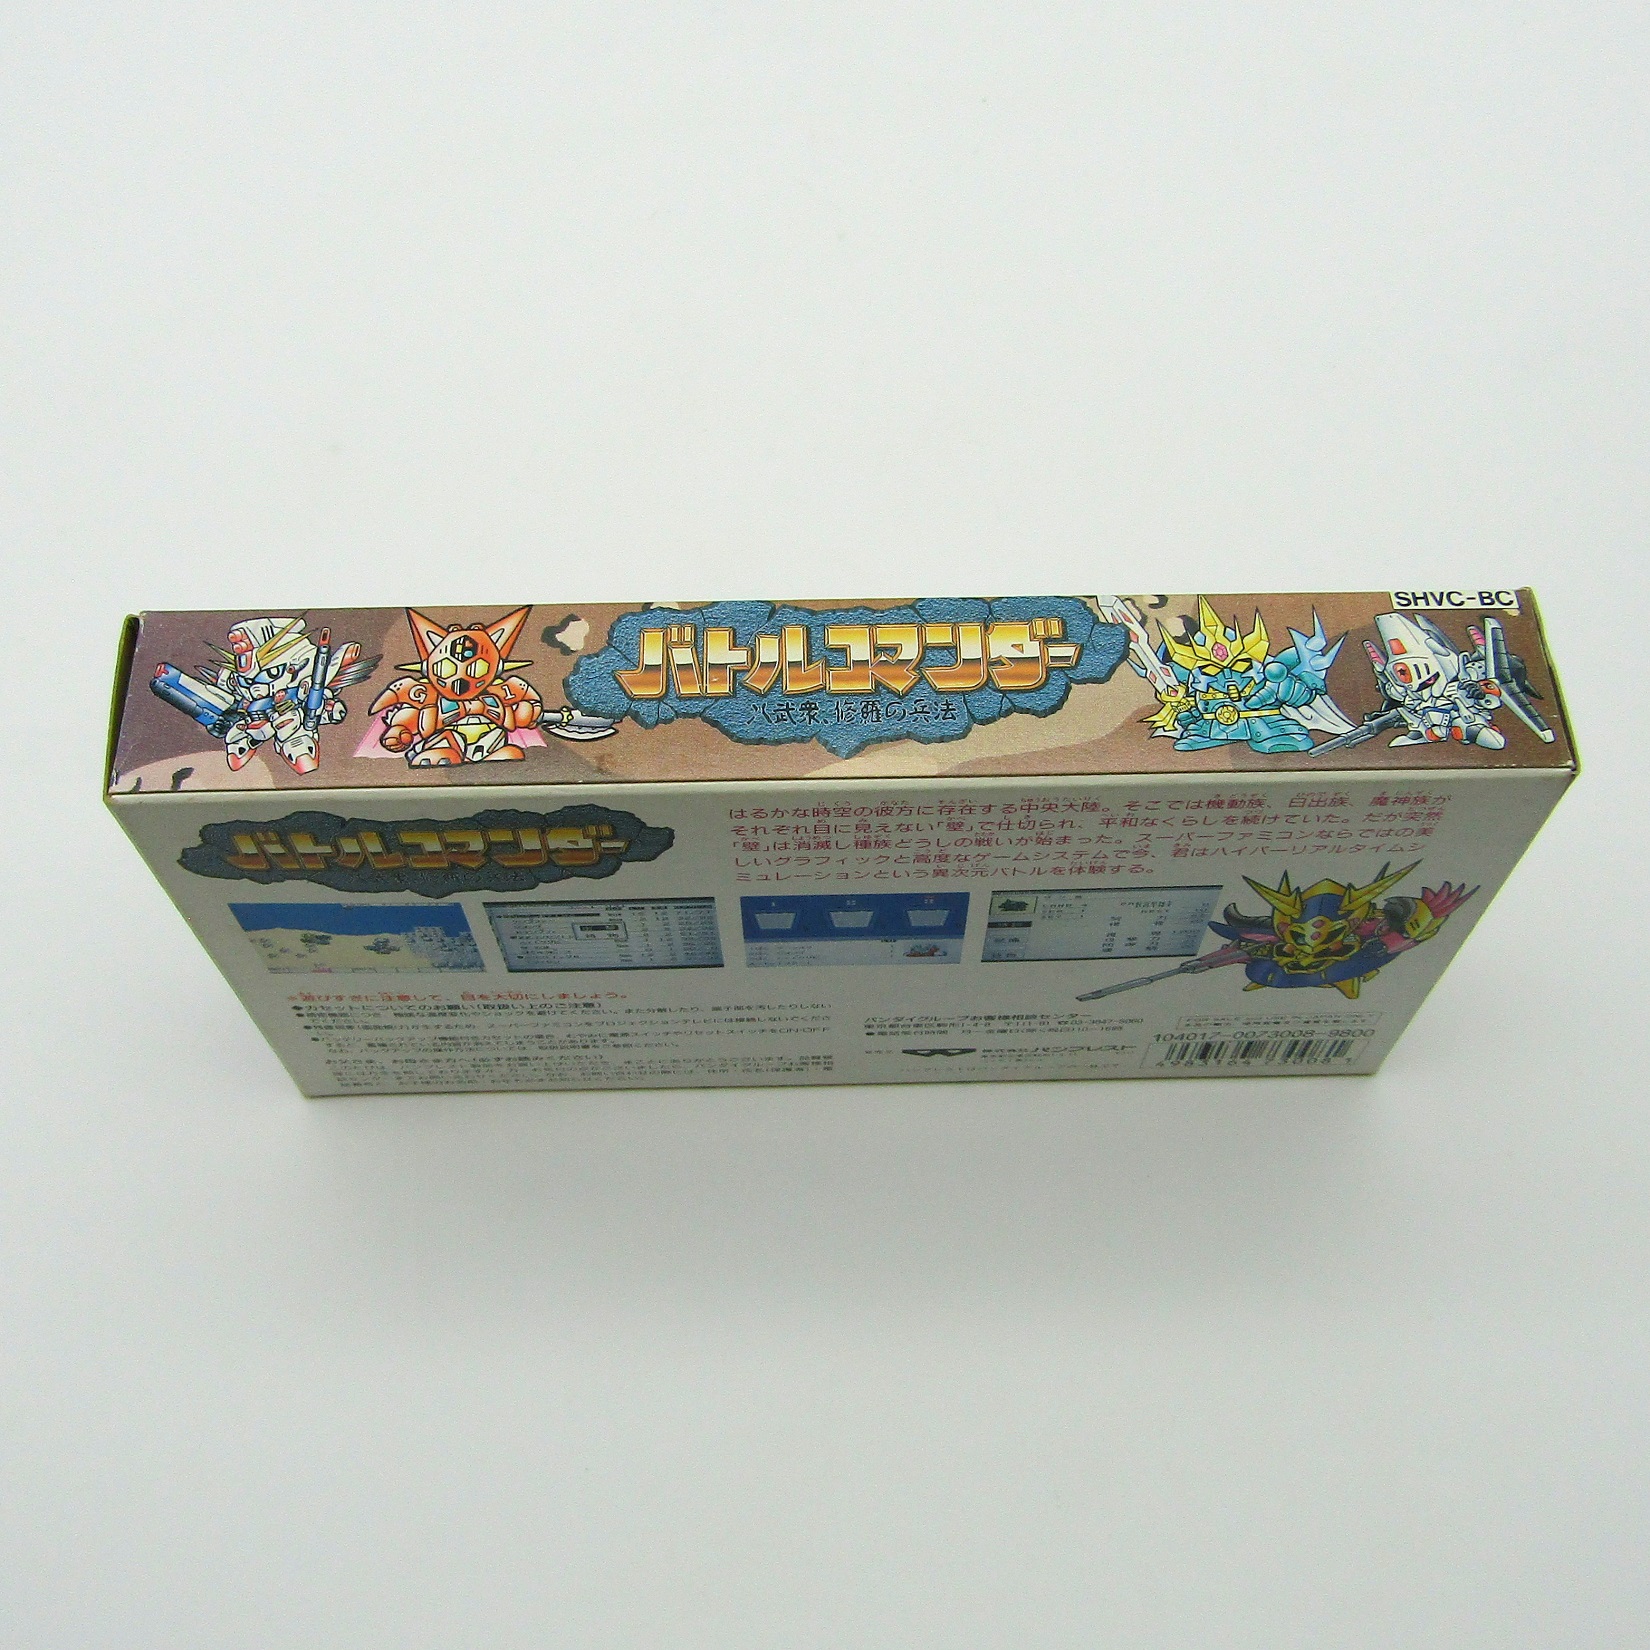 Jeu vidéo Nintendo. Console Super Famicom. Battle Commander: Hachibushu Shura no Heihou